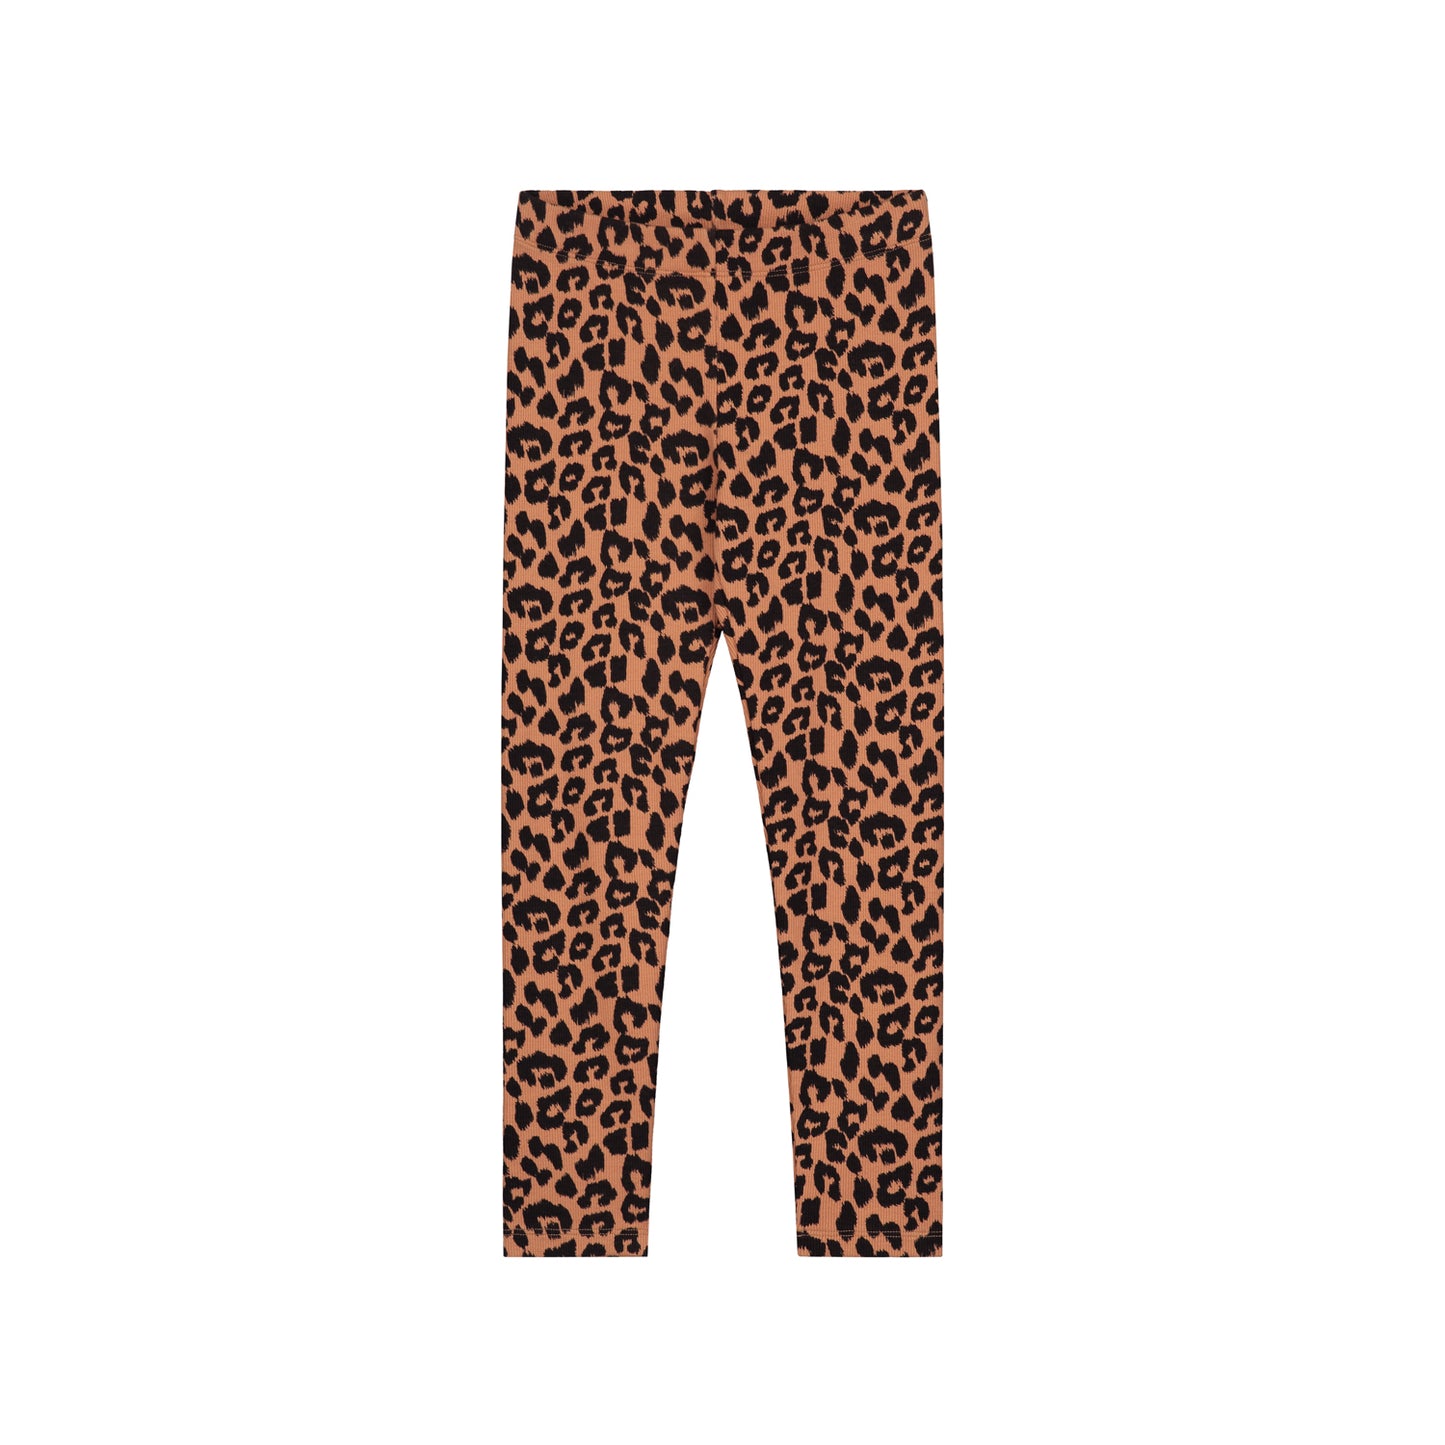 Leopard Pants Rustic